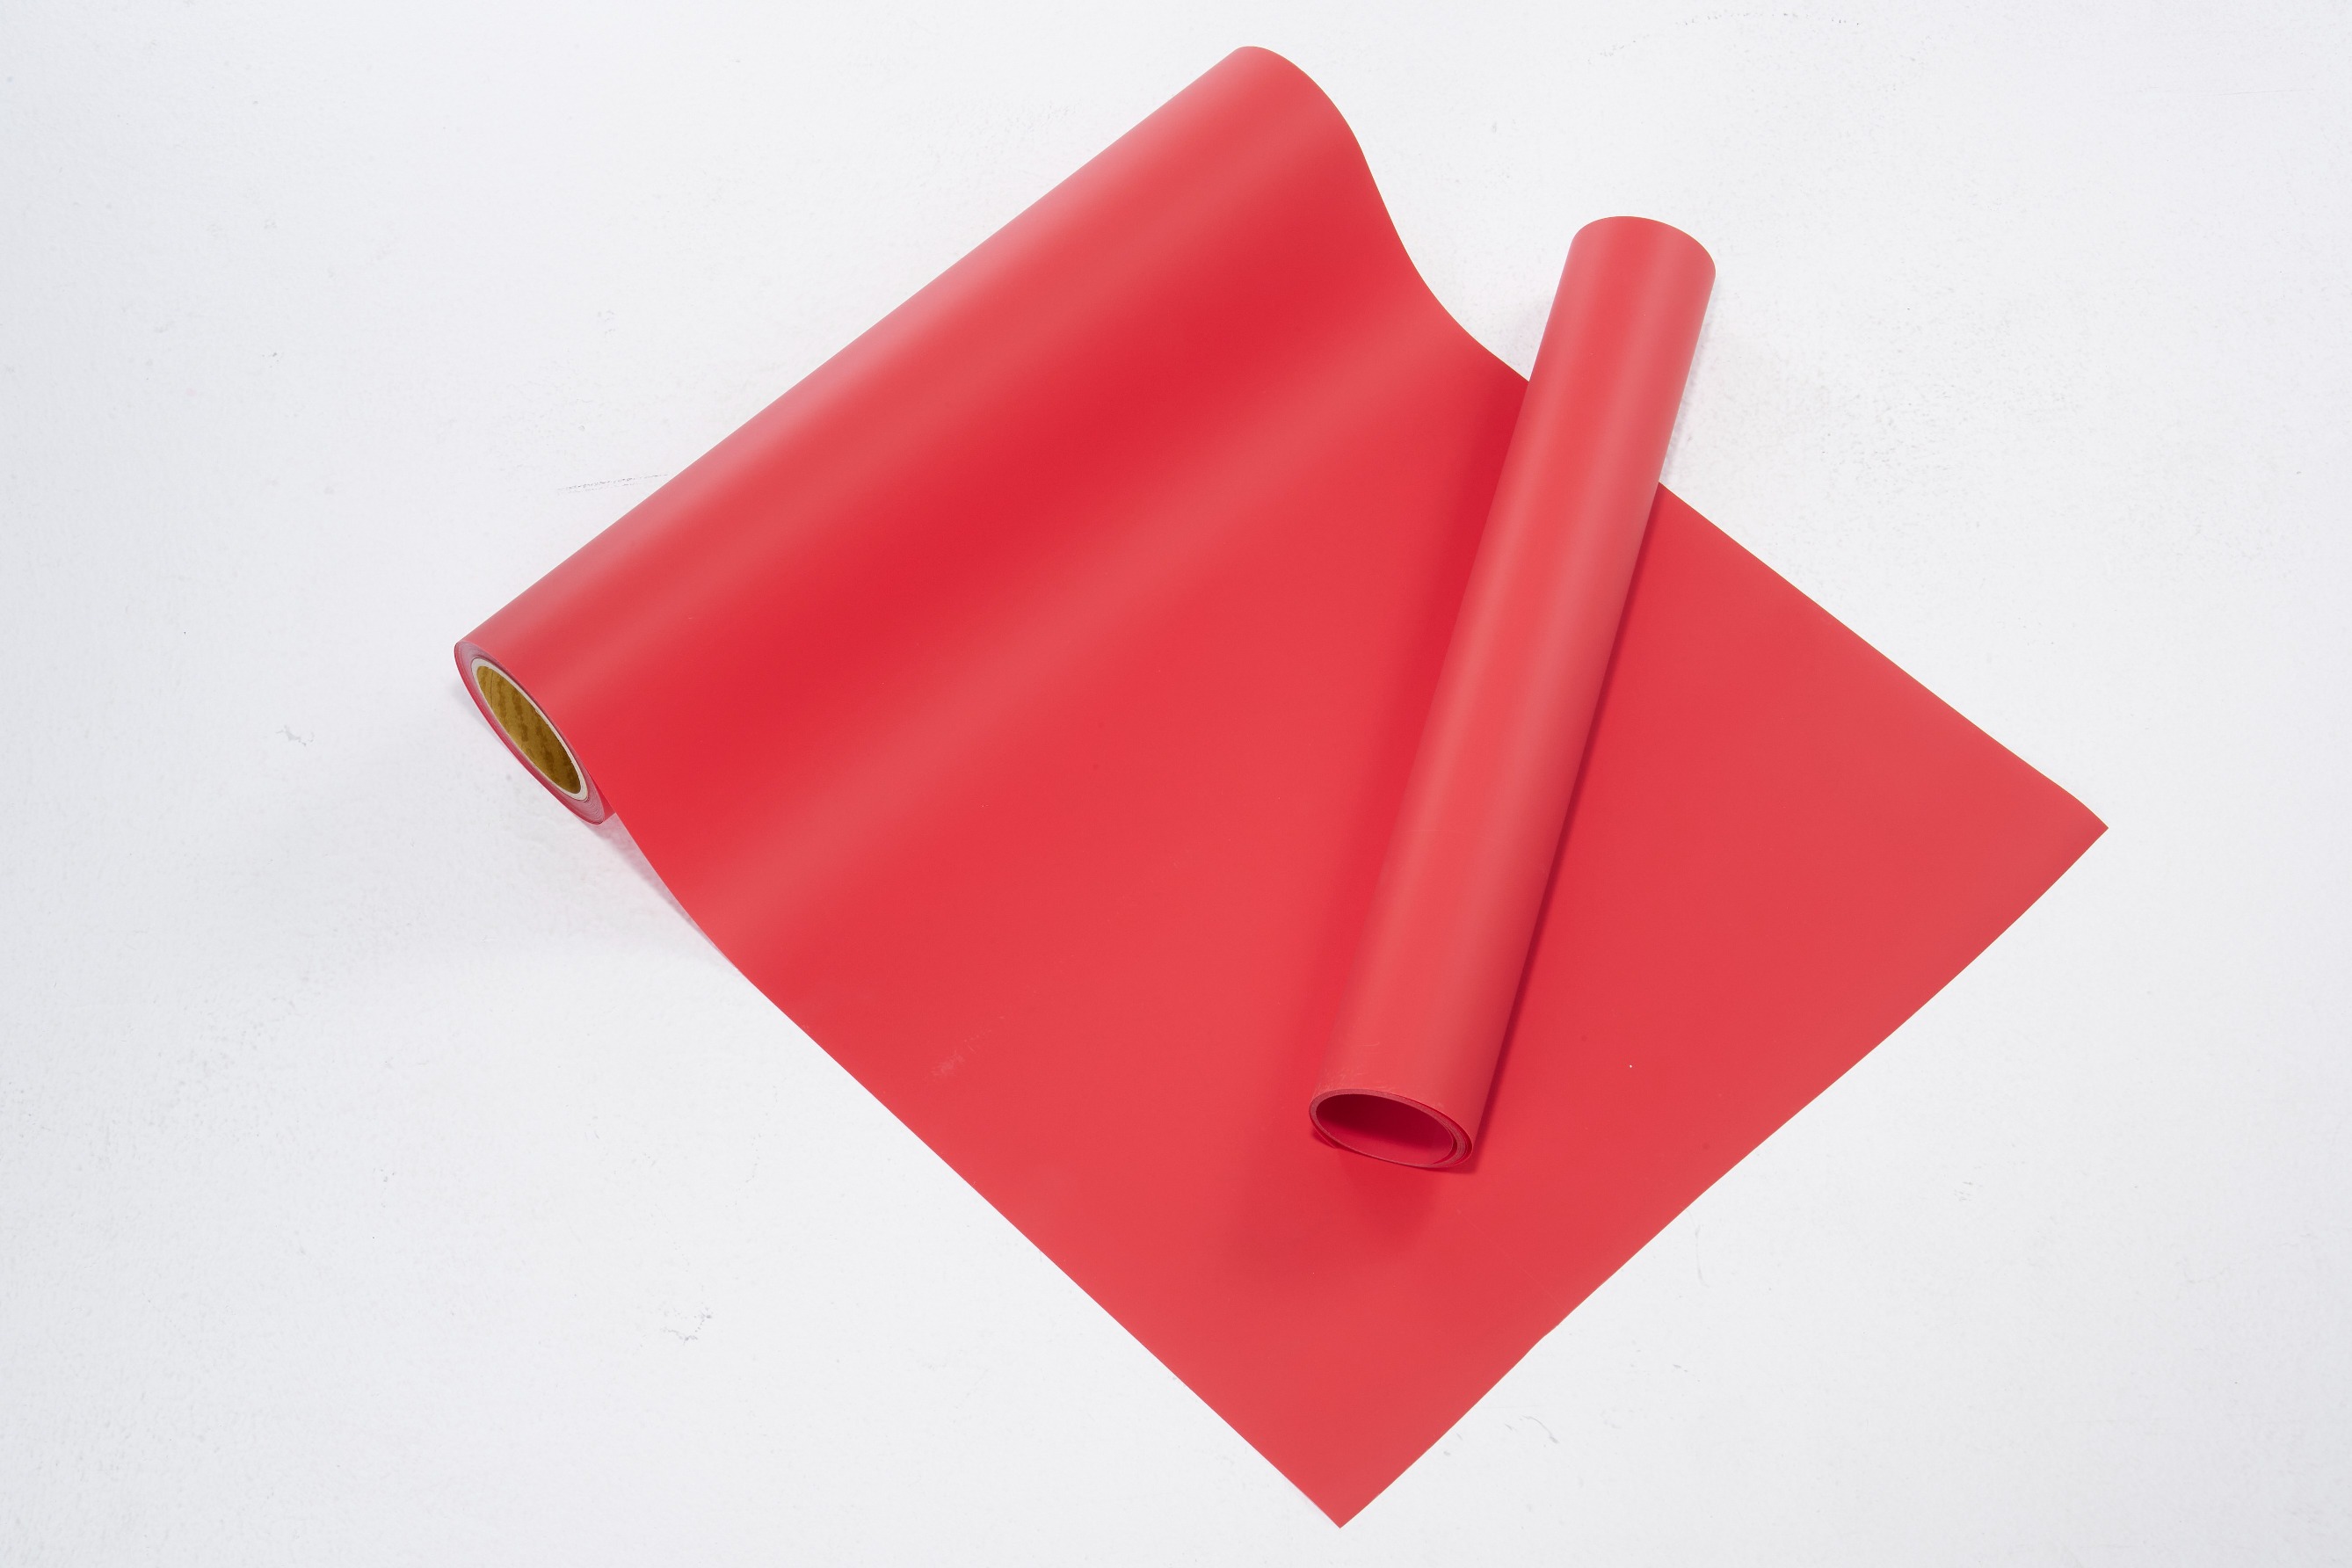 Red 3D Puff Heat Transfer Vinyl